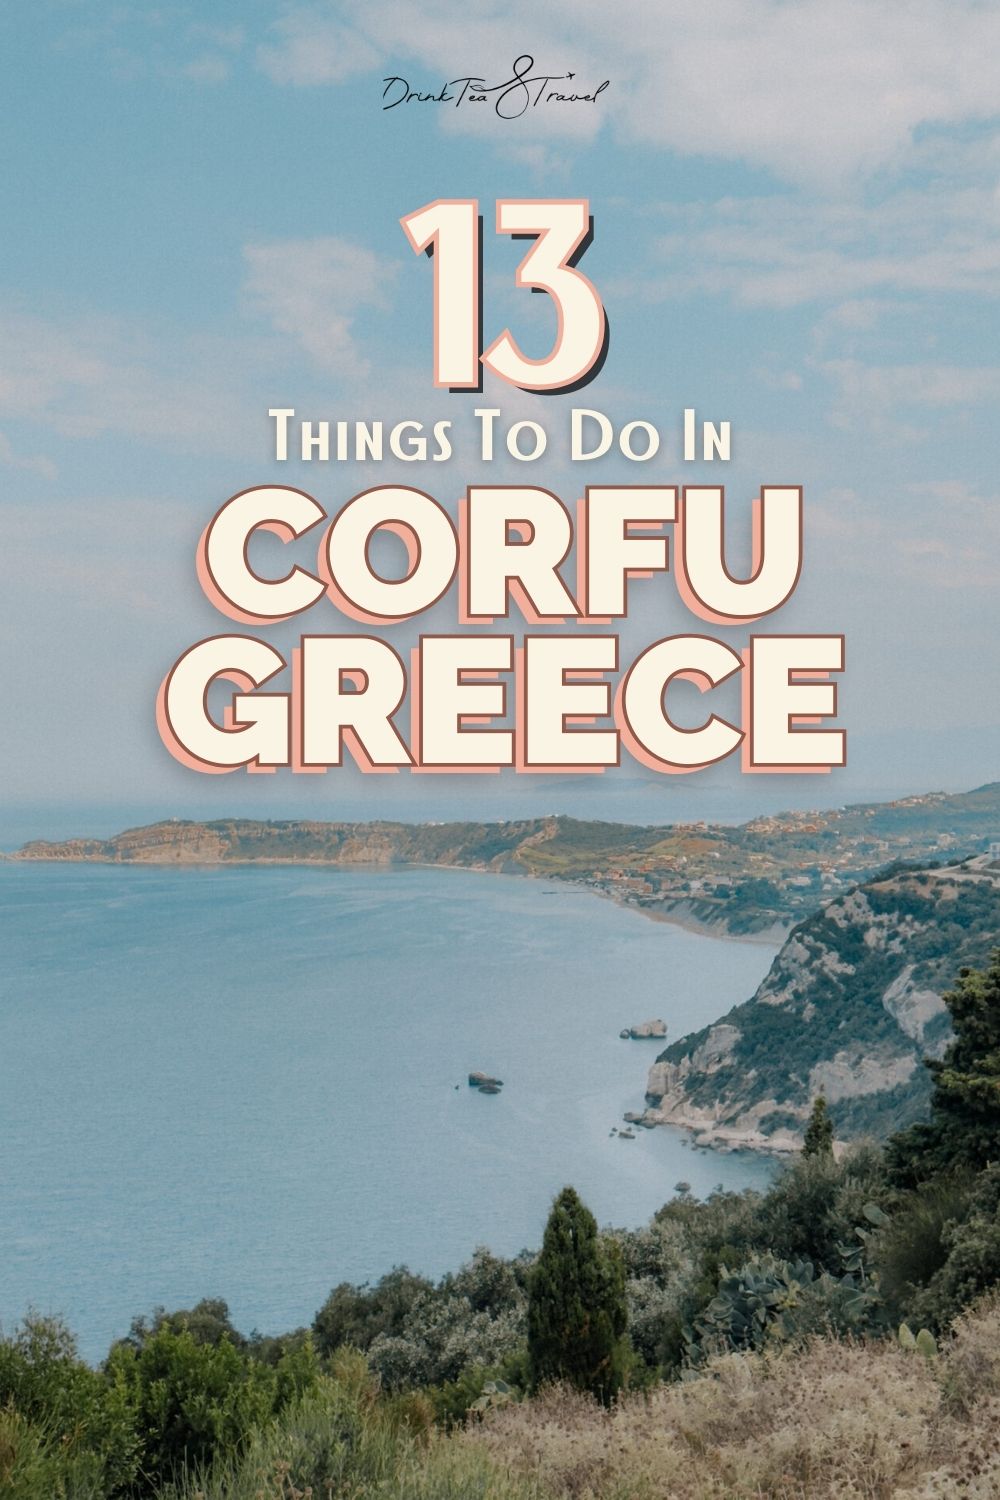 Things to do in Corfu Greece